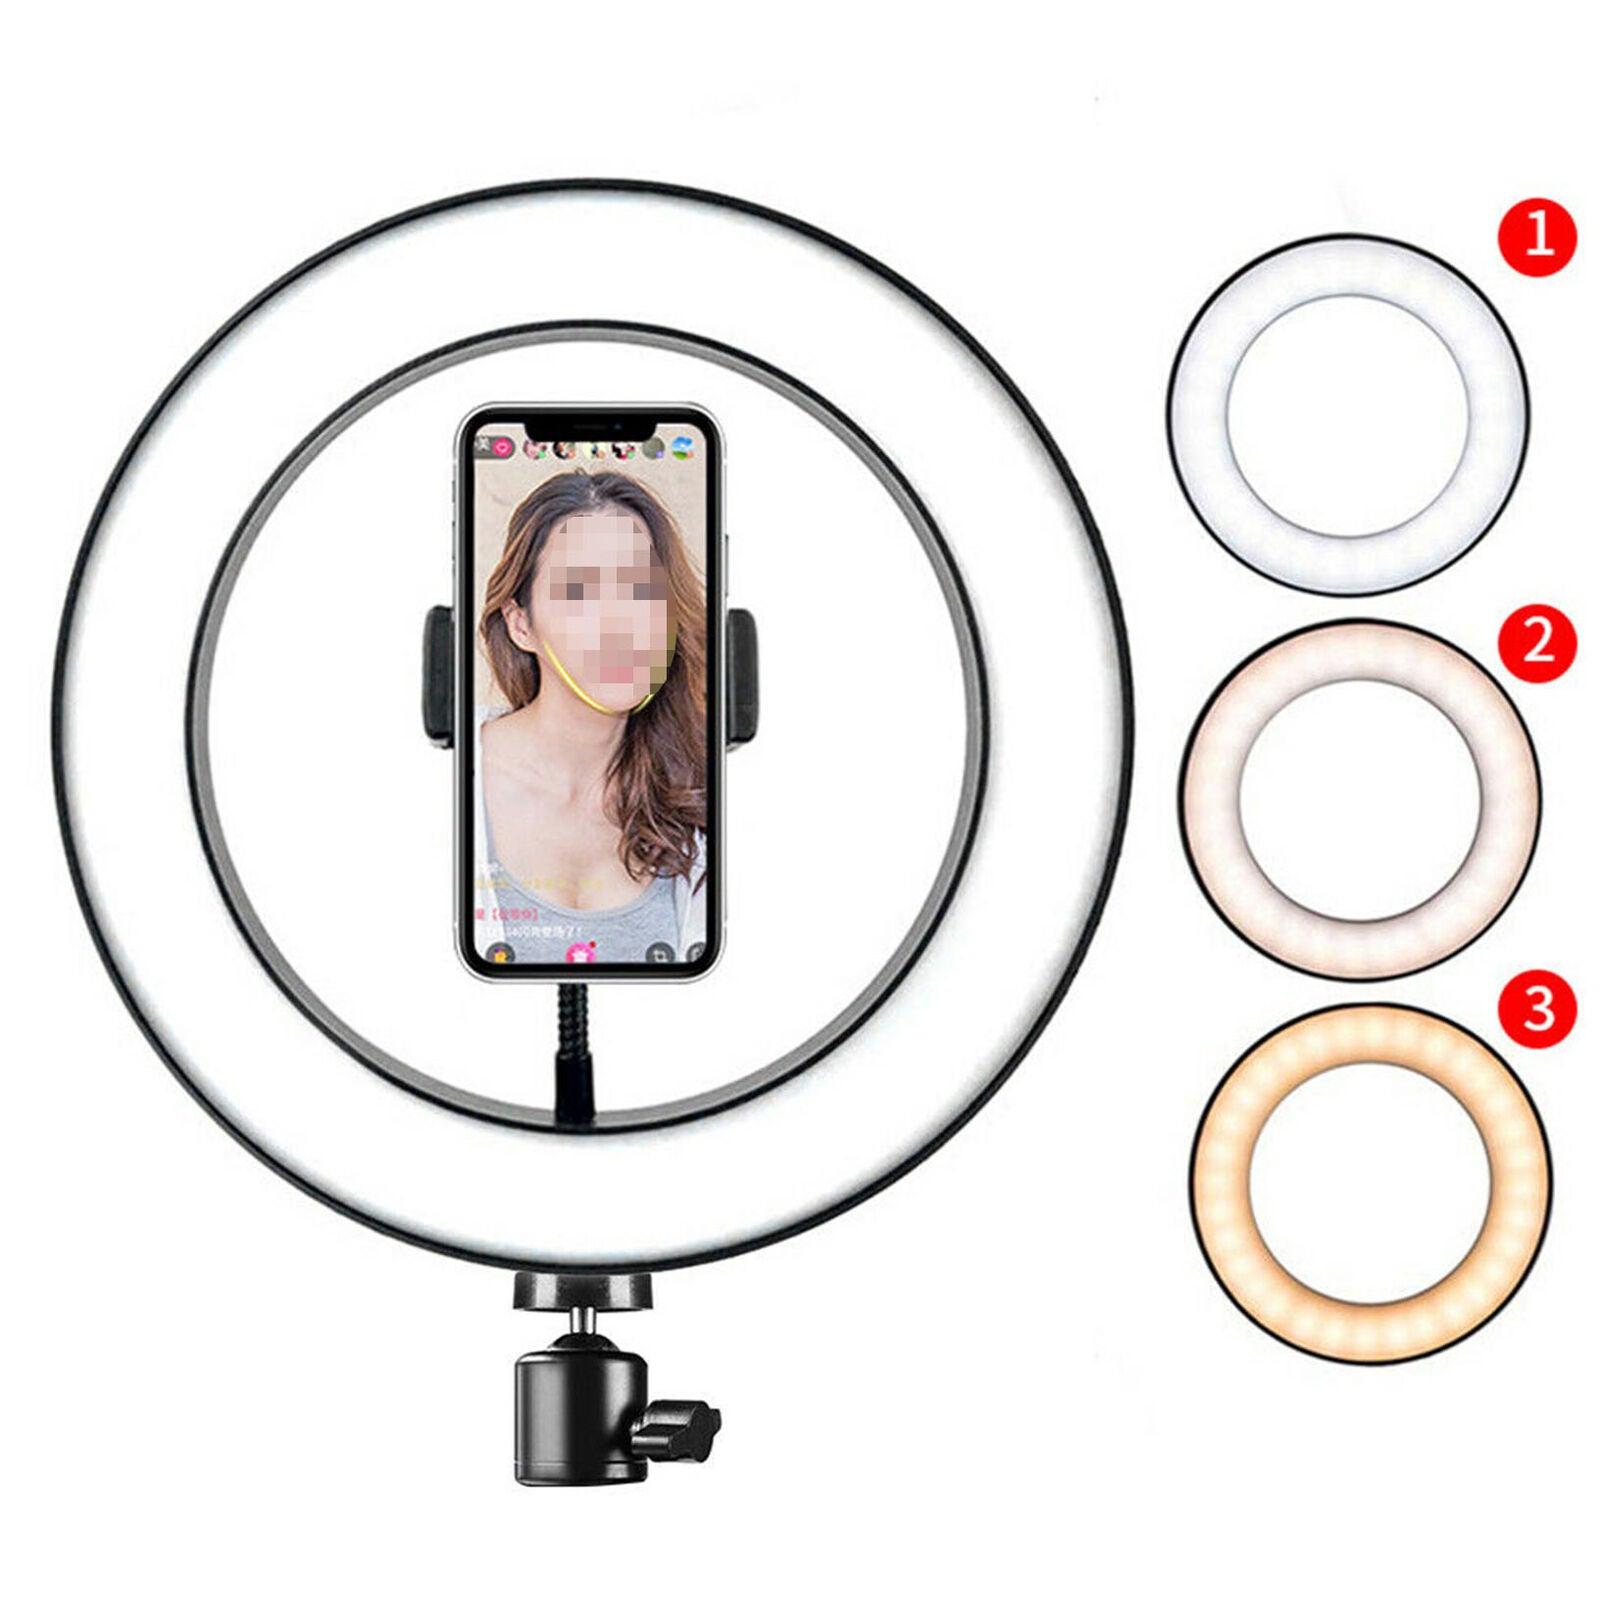 128 LED Ring Fill Light Studio Photo Video USB Dimmable Lamp Selfie Camera Phone